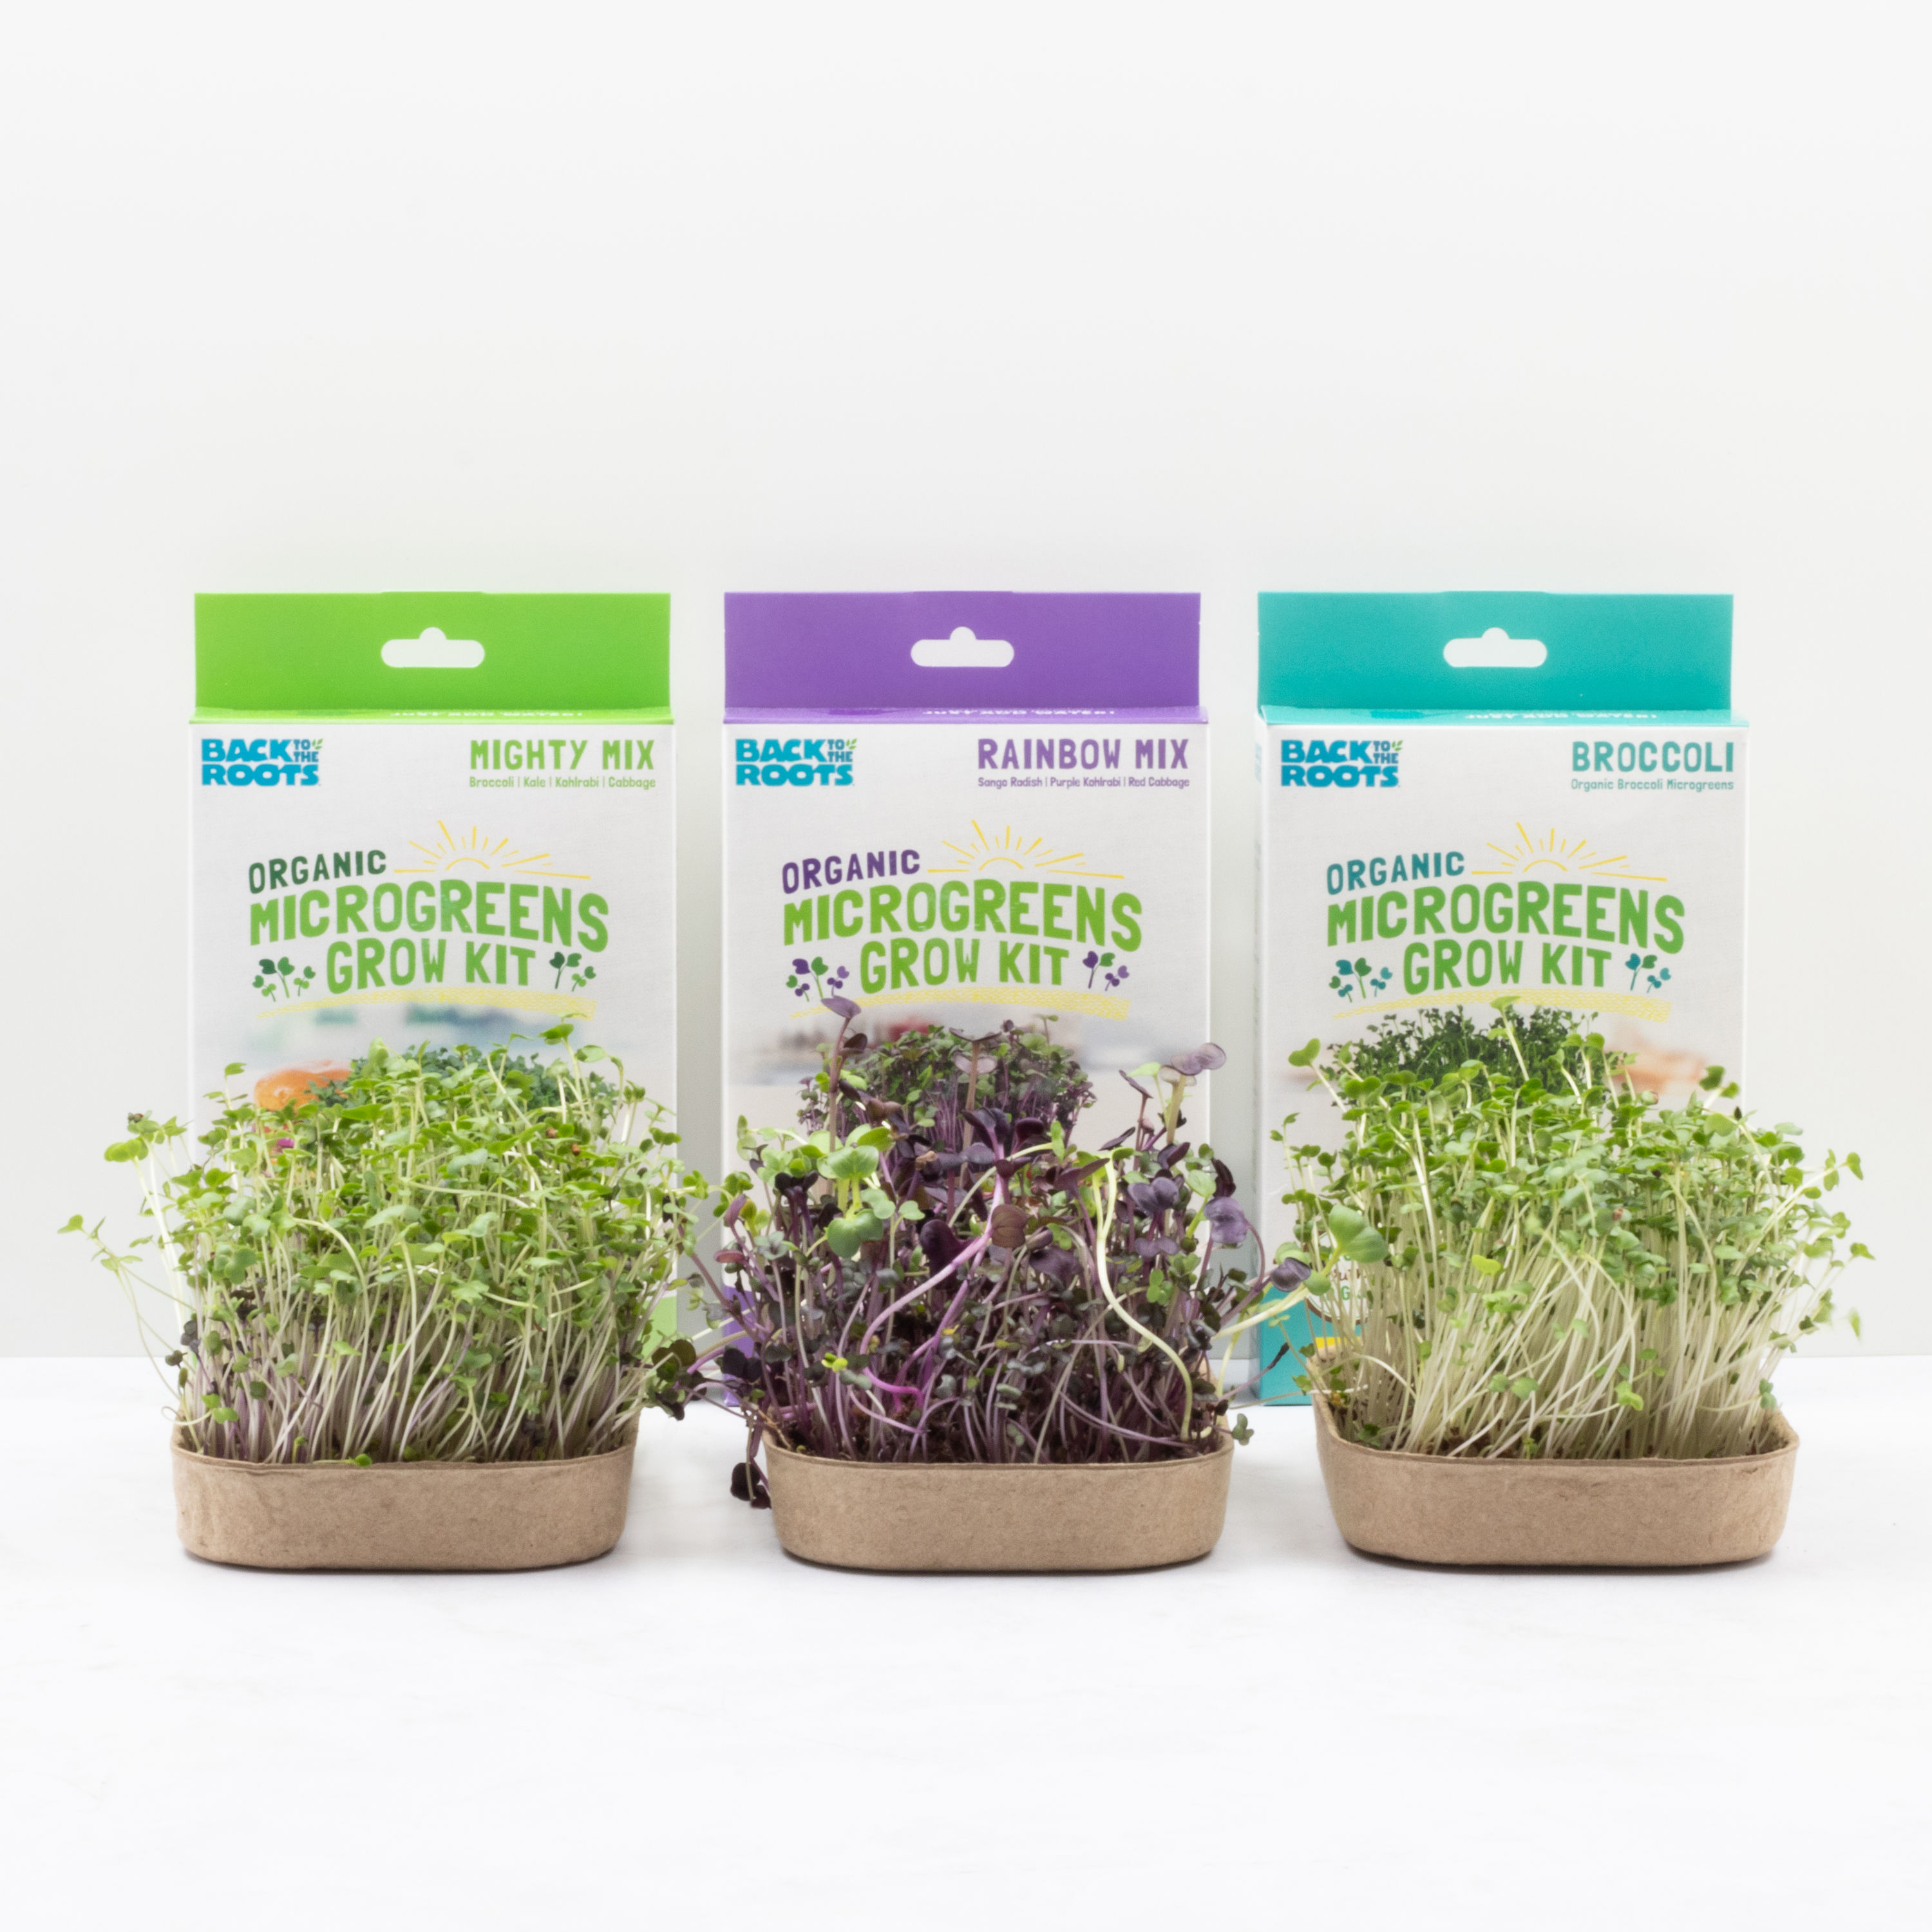 Grow Kits Gardening Kits at Lowes.com